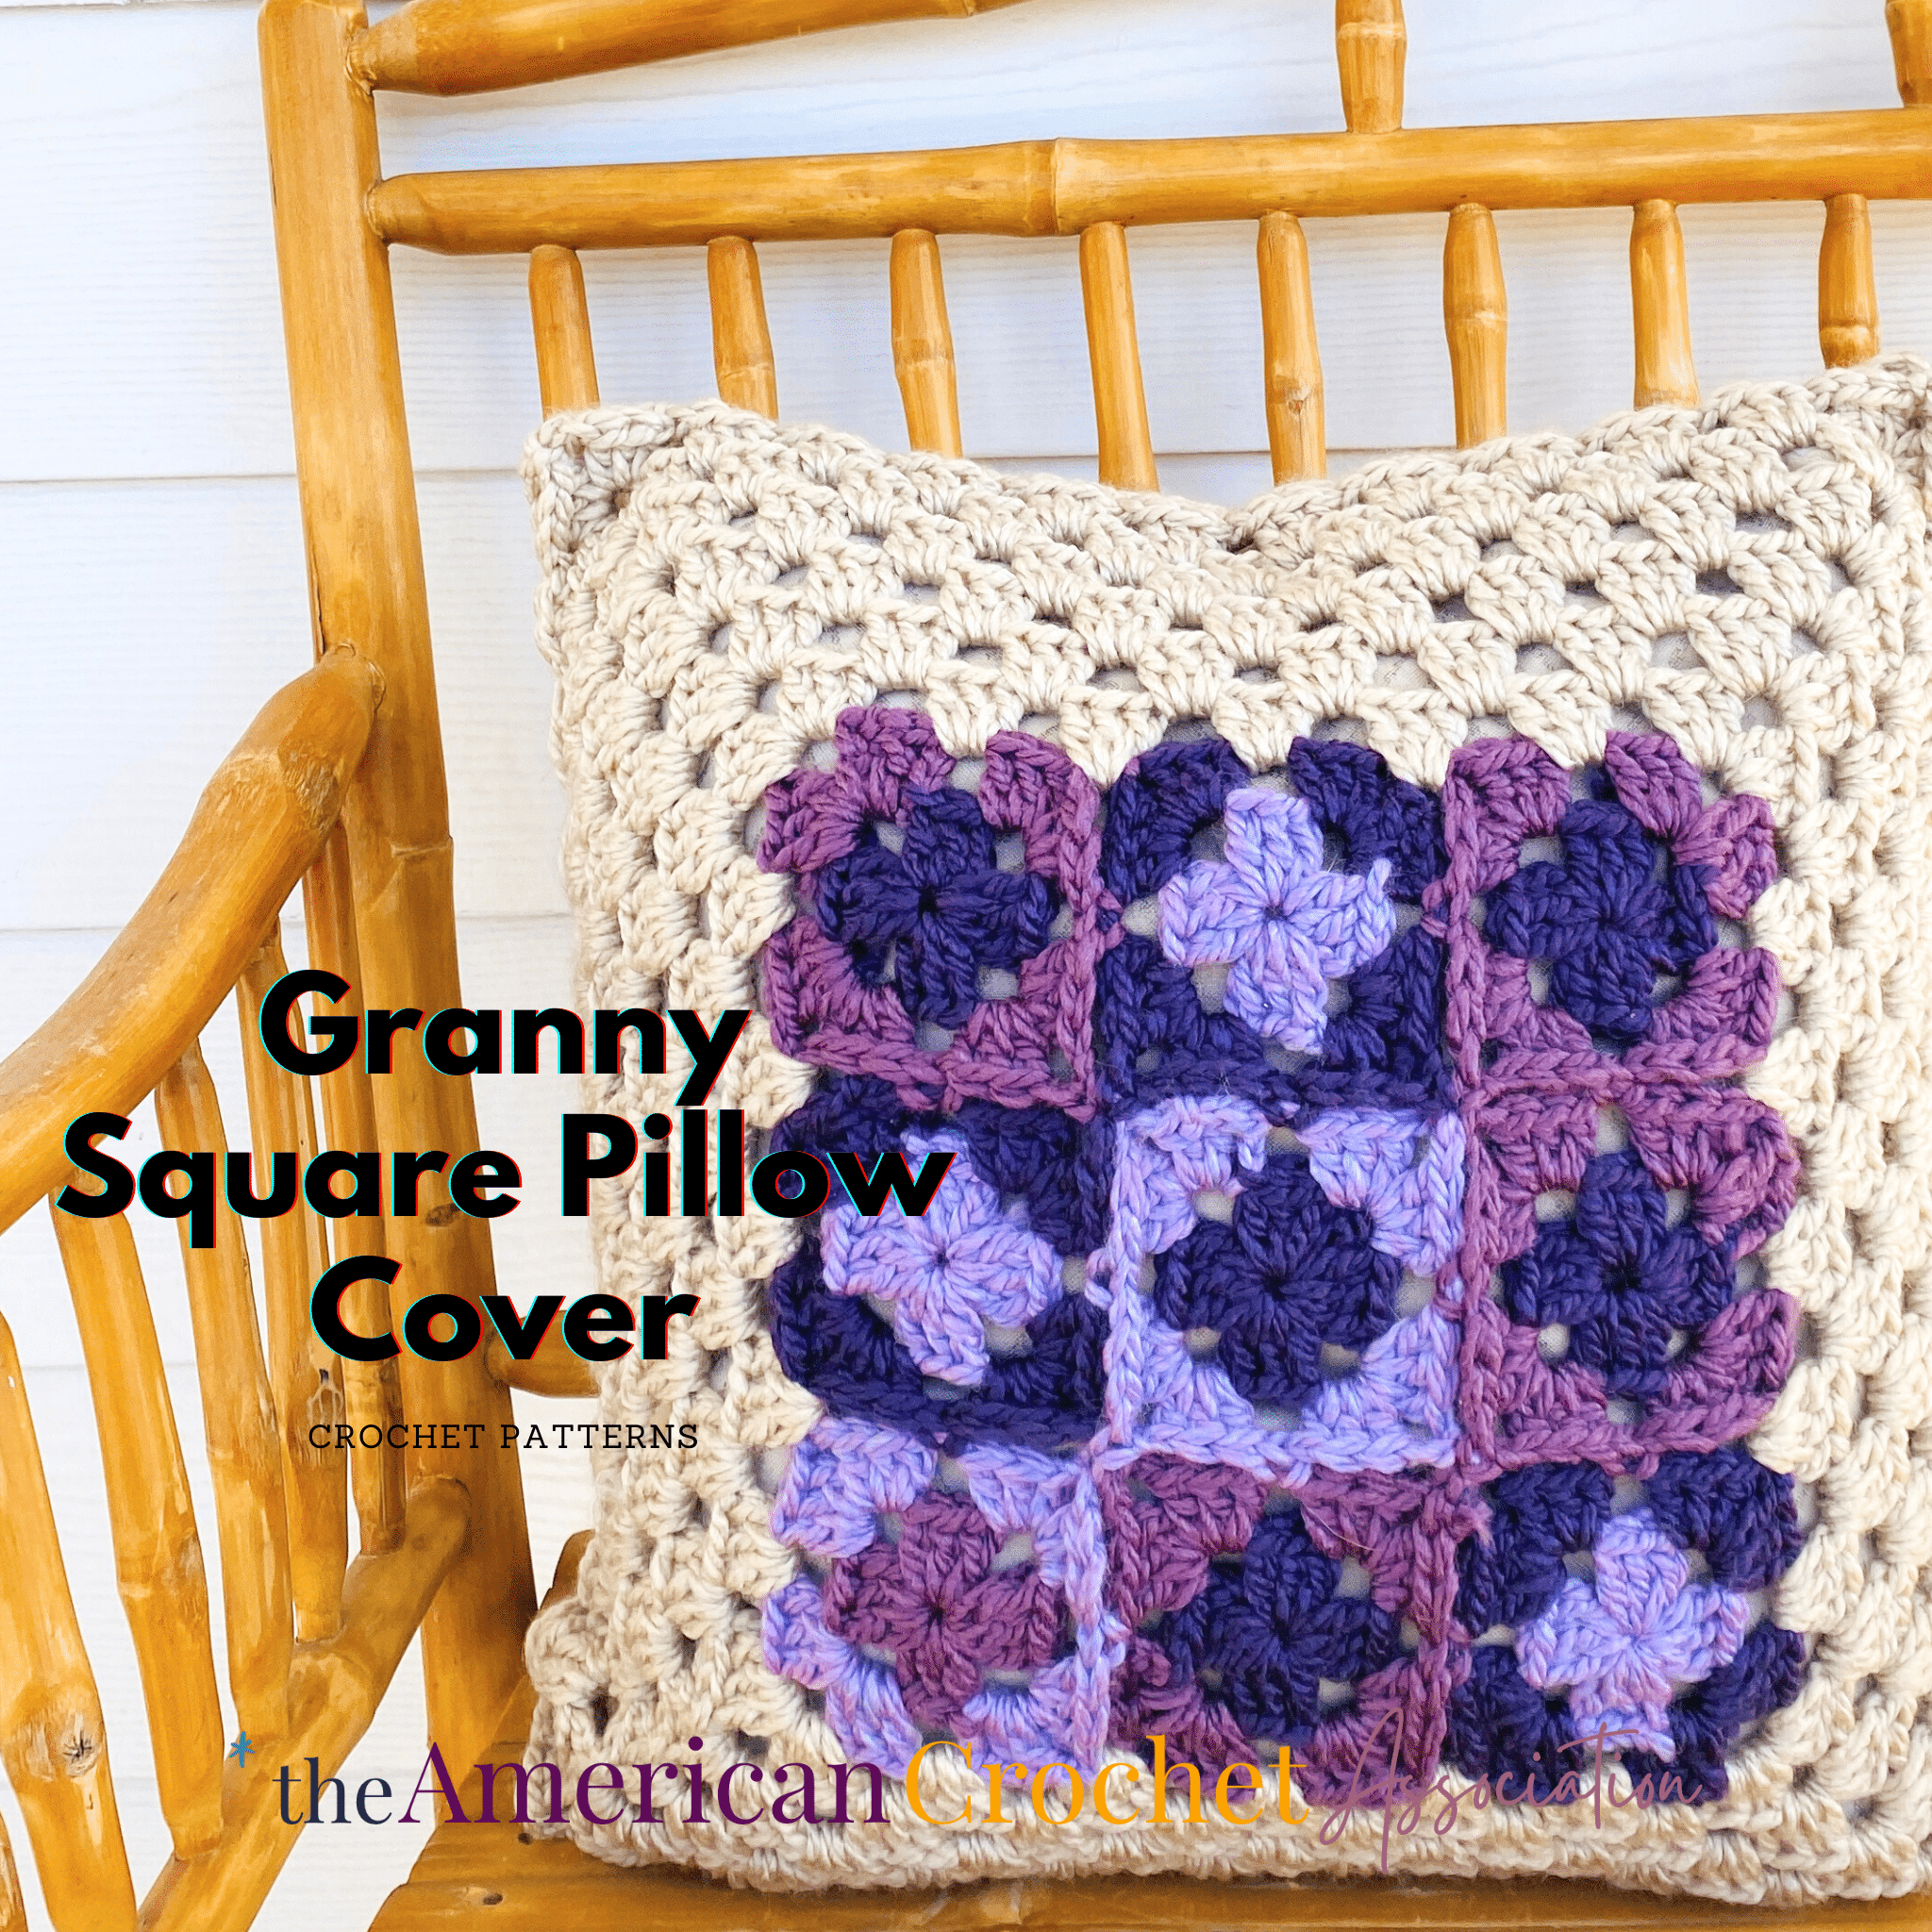 Granny Square Pillow Cover Outside Crochet Pattern - American Crochet Association